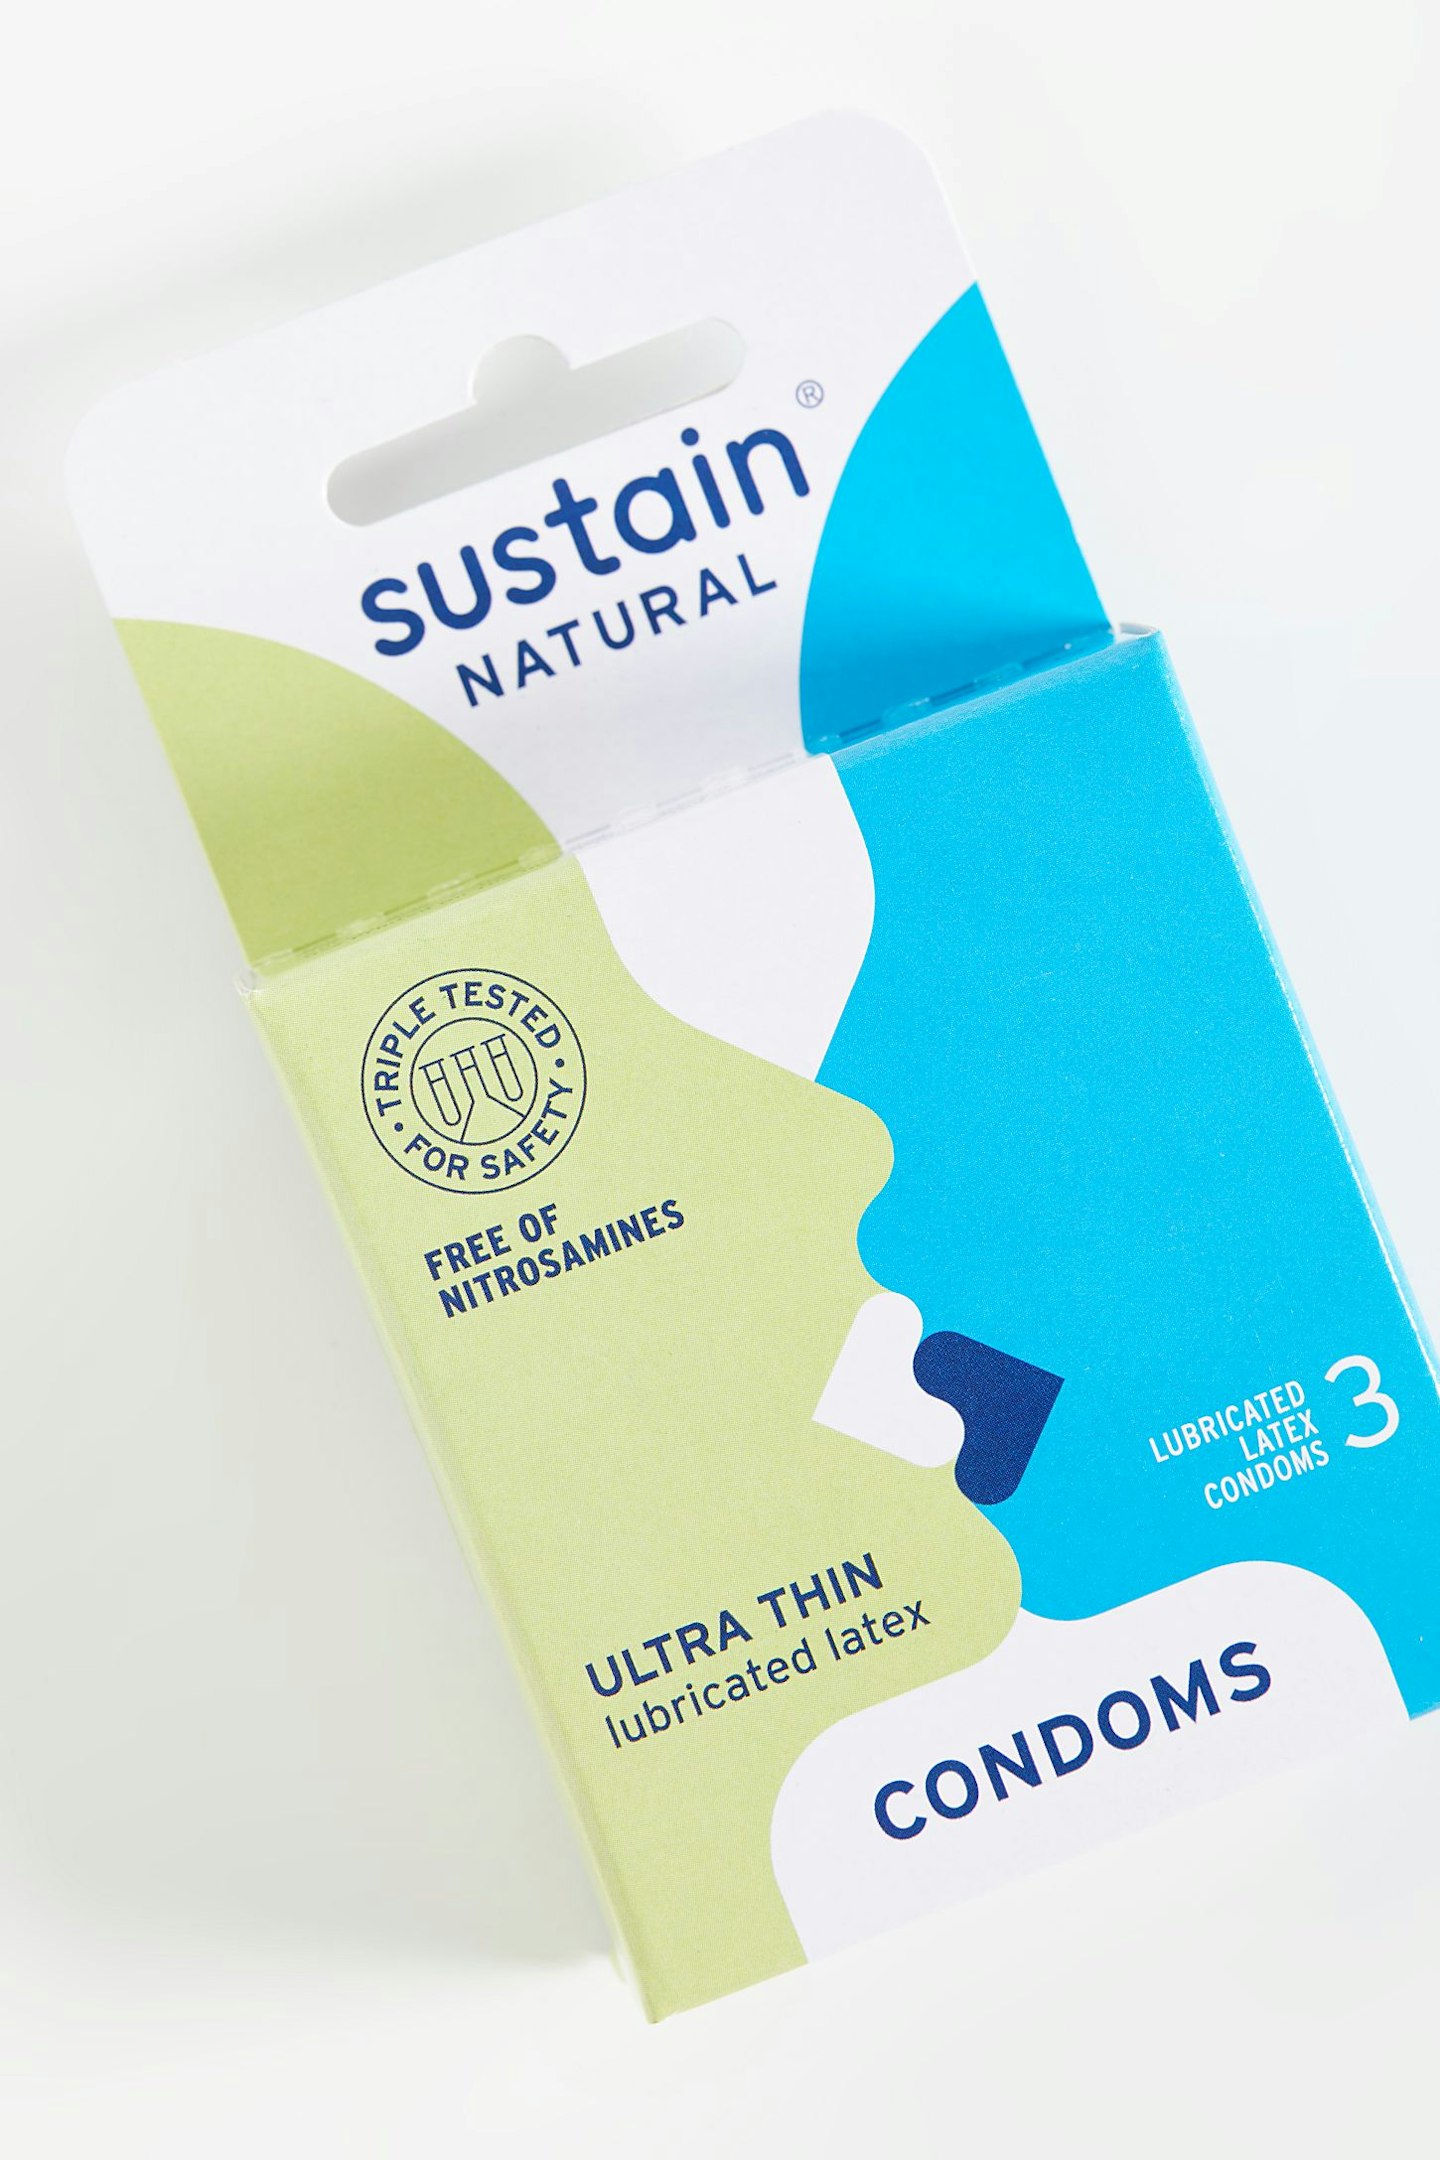 Sustain Natural Condoms, £5 for 3